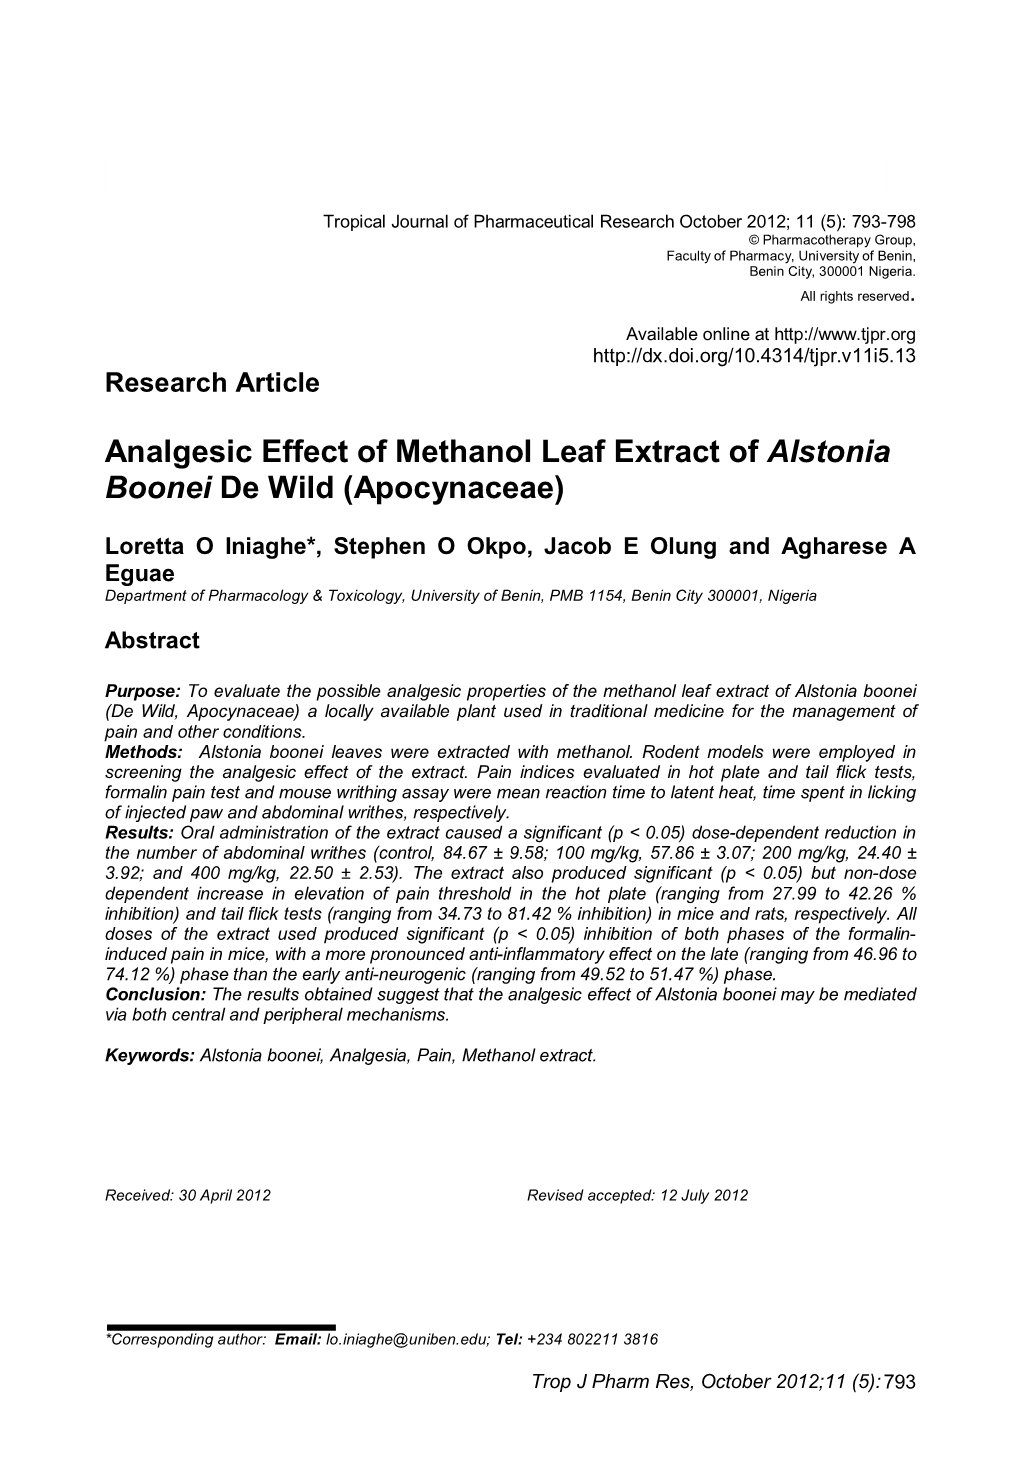 Analgesic Effect of Methanol Leaf Extract of Alstonia Boonei De Wild (Apocynaceae)